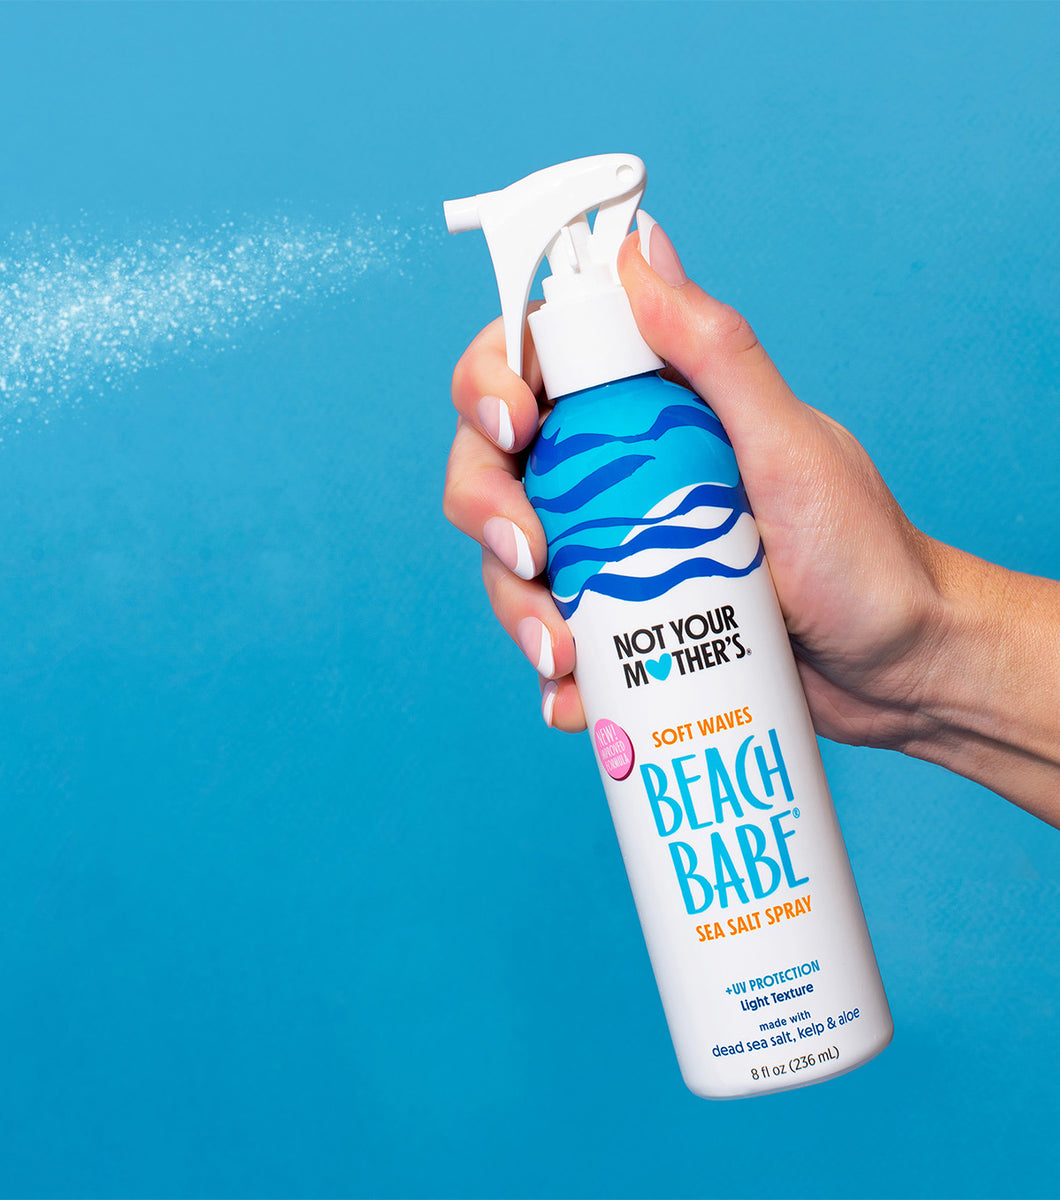 Sea Salt Texture Spray